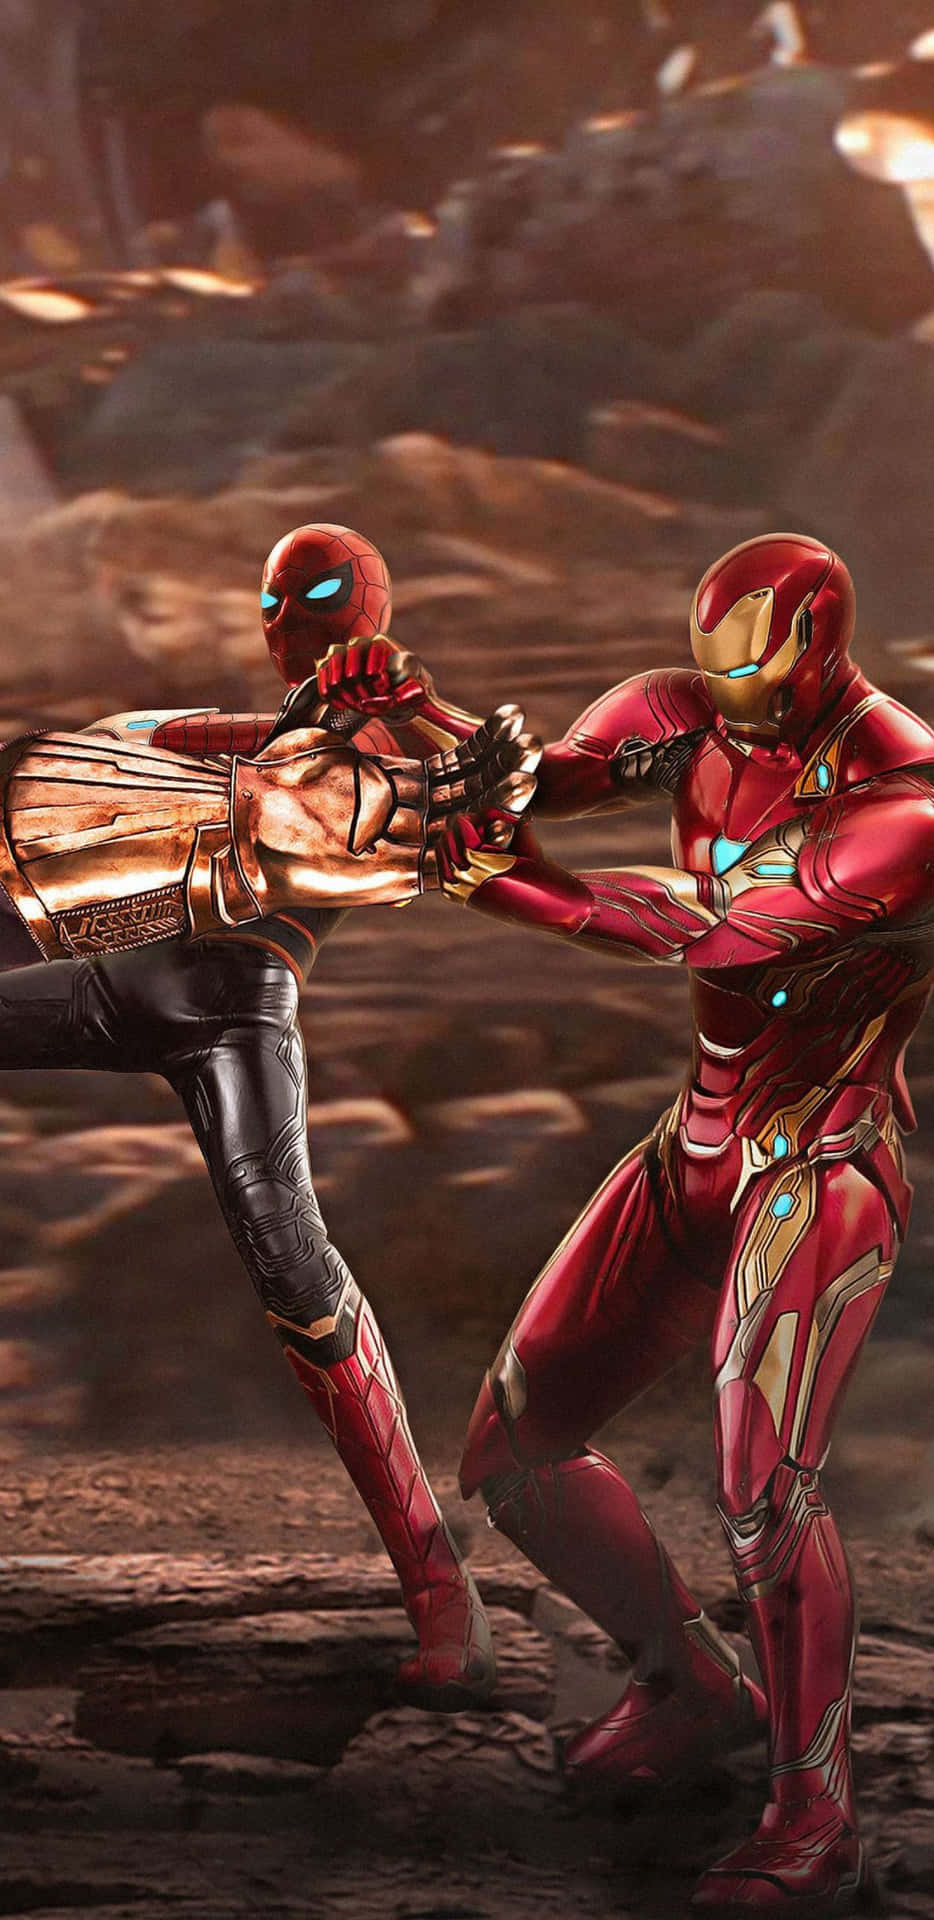 Pixel3xl Iron Man Och Spiderman Bakgrundsbild.